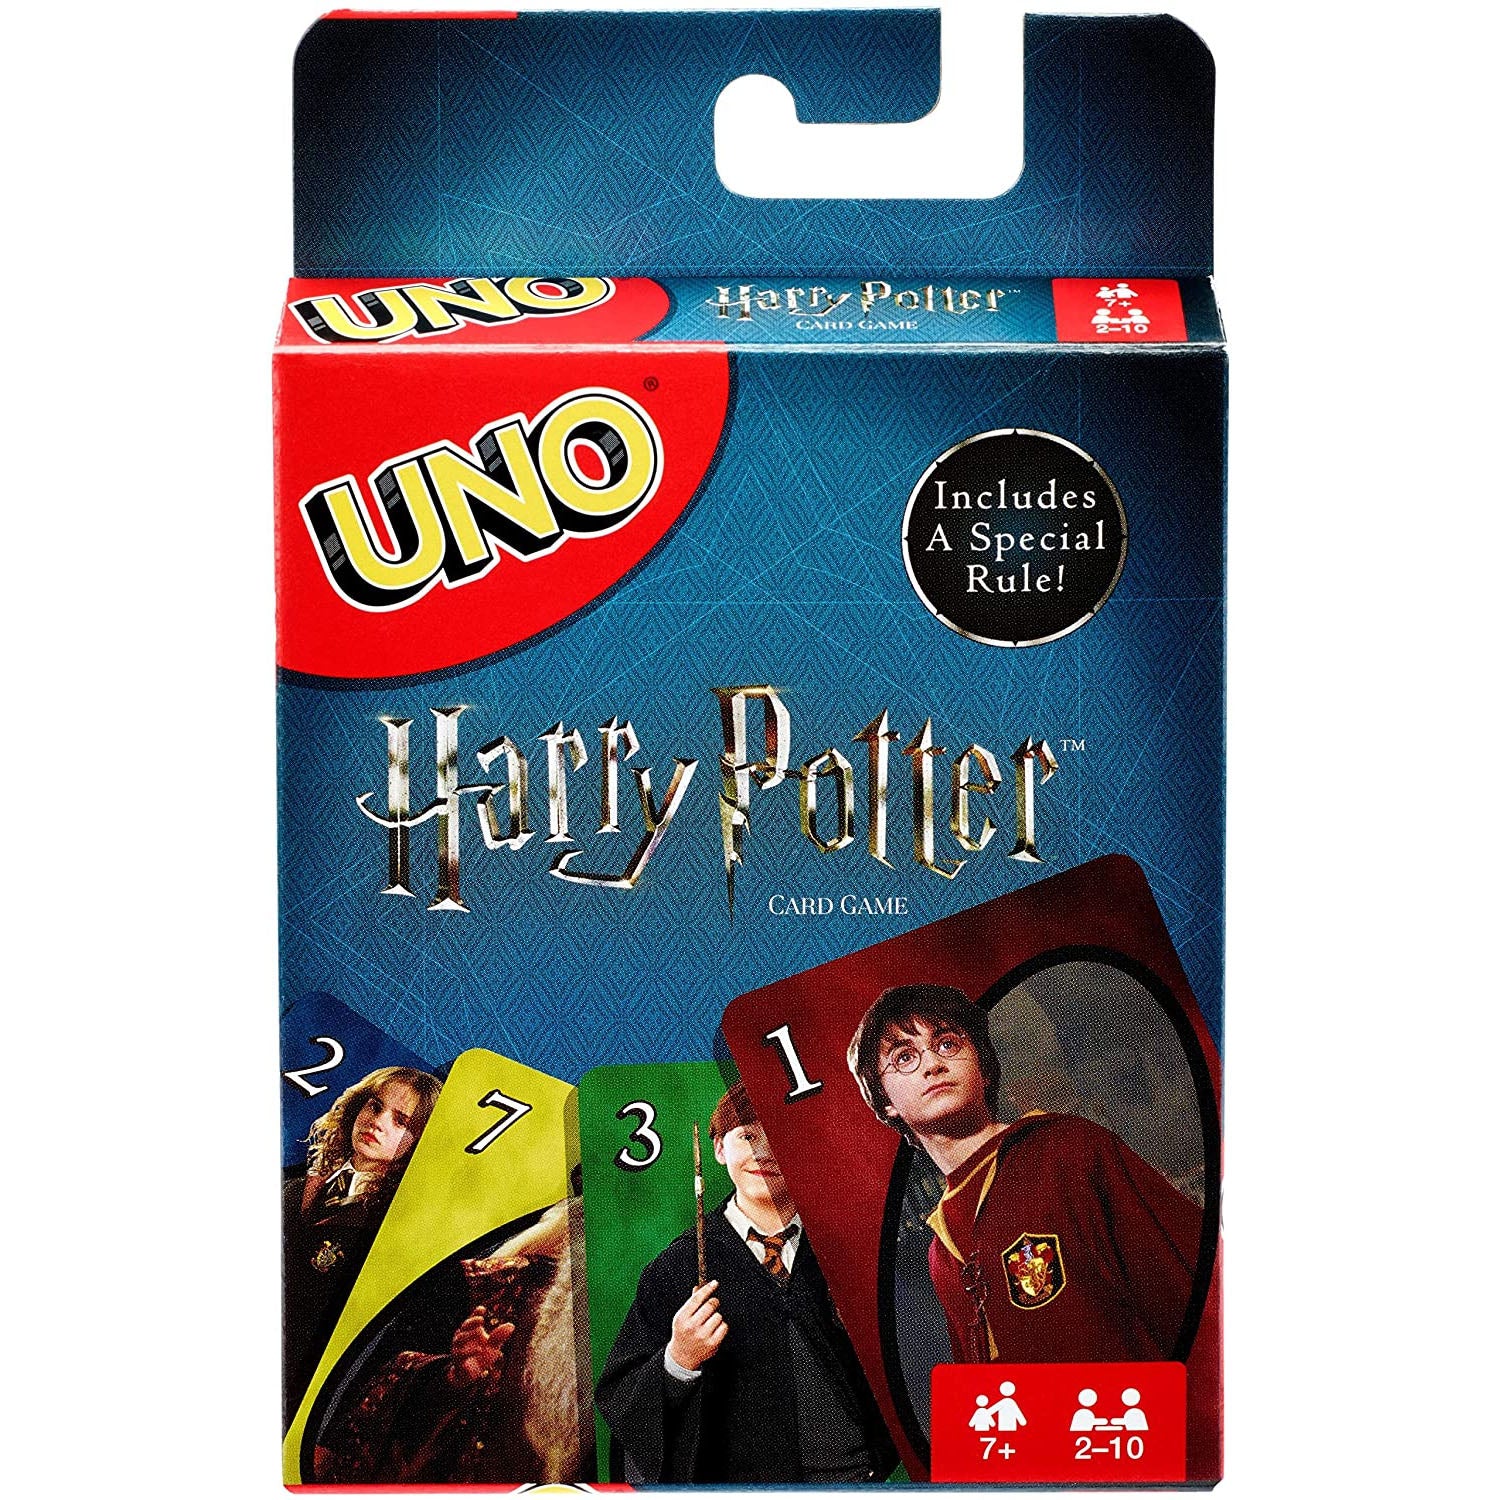 Harry Potter Uno